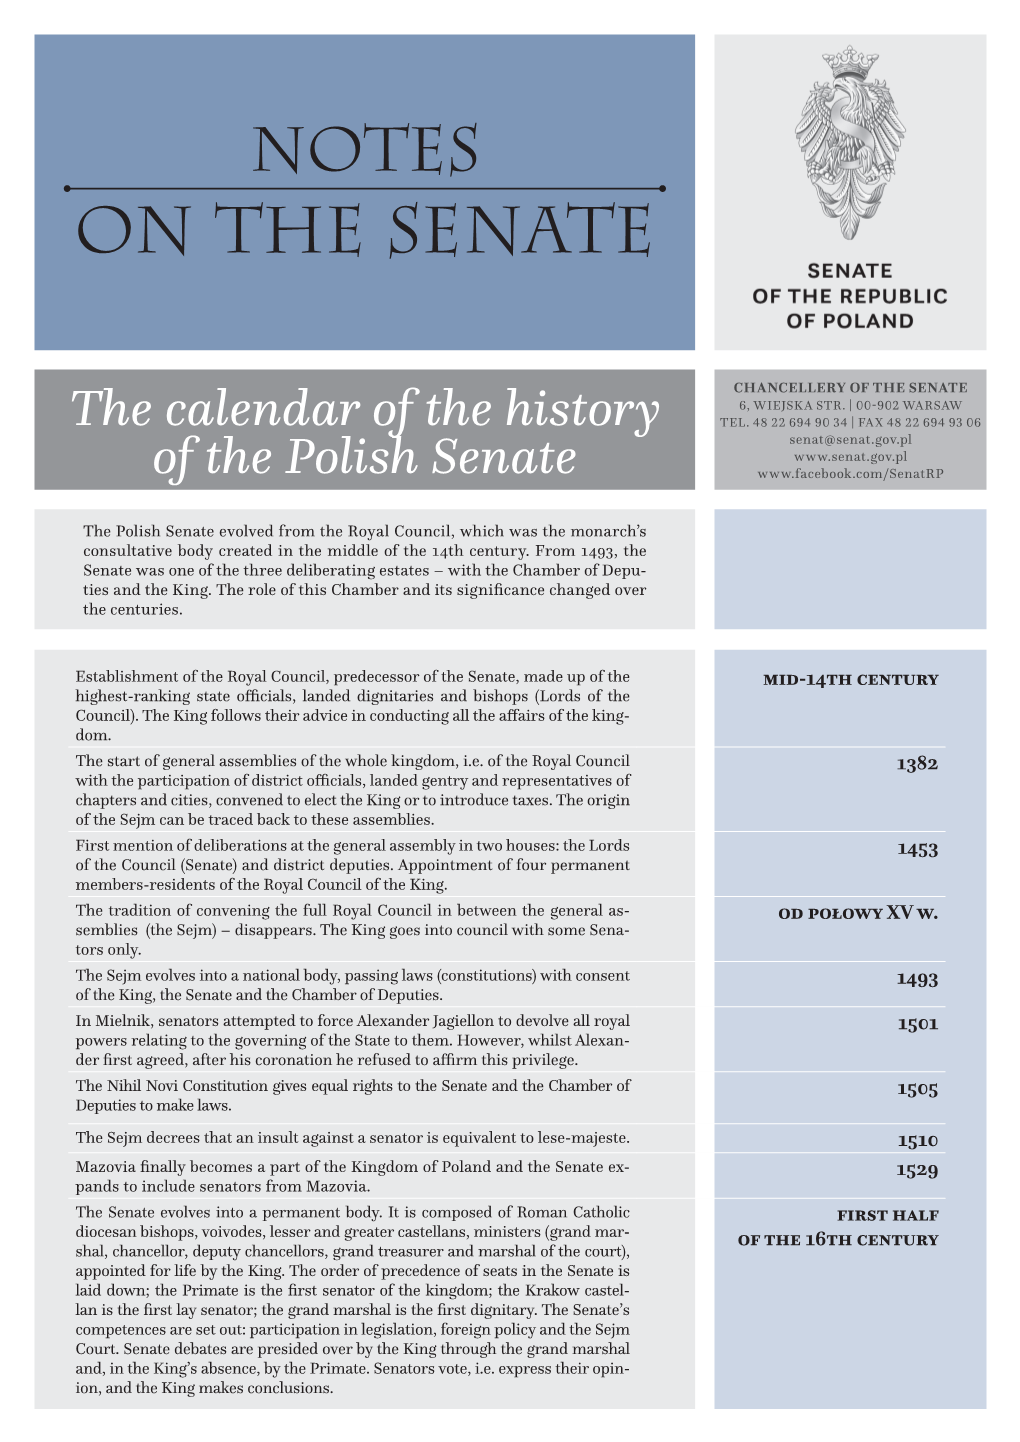 The Calendar of the History of the Polish Senate